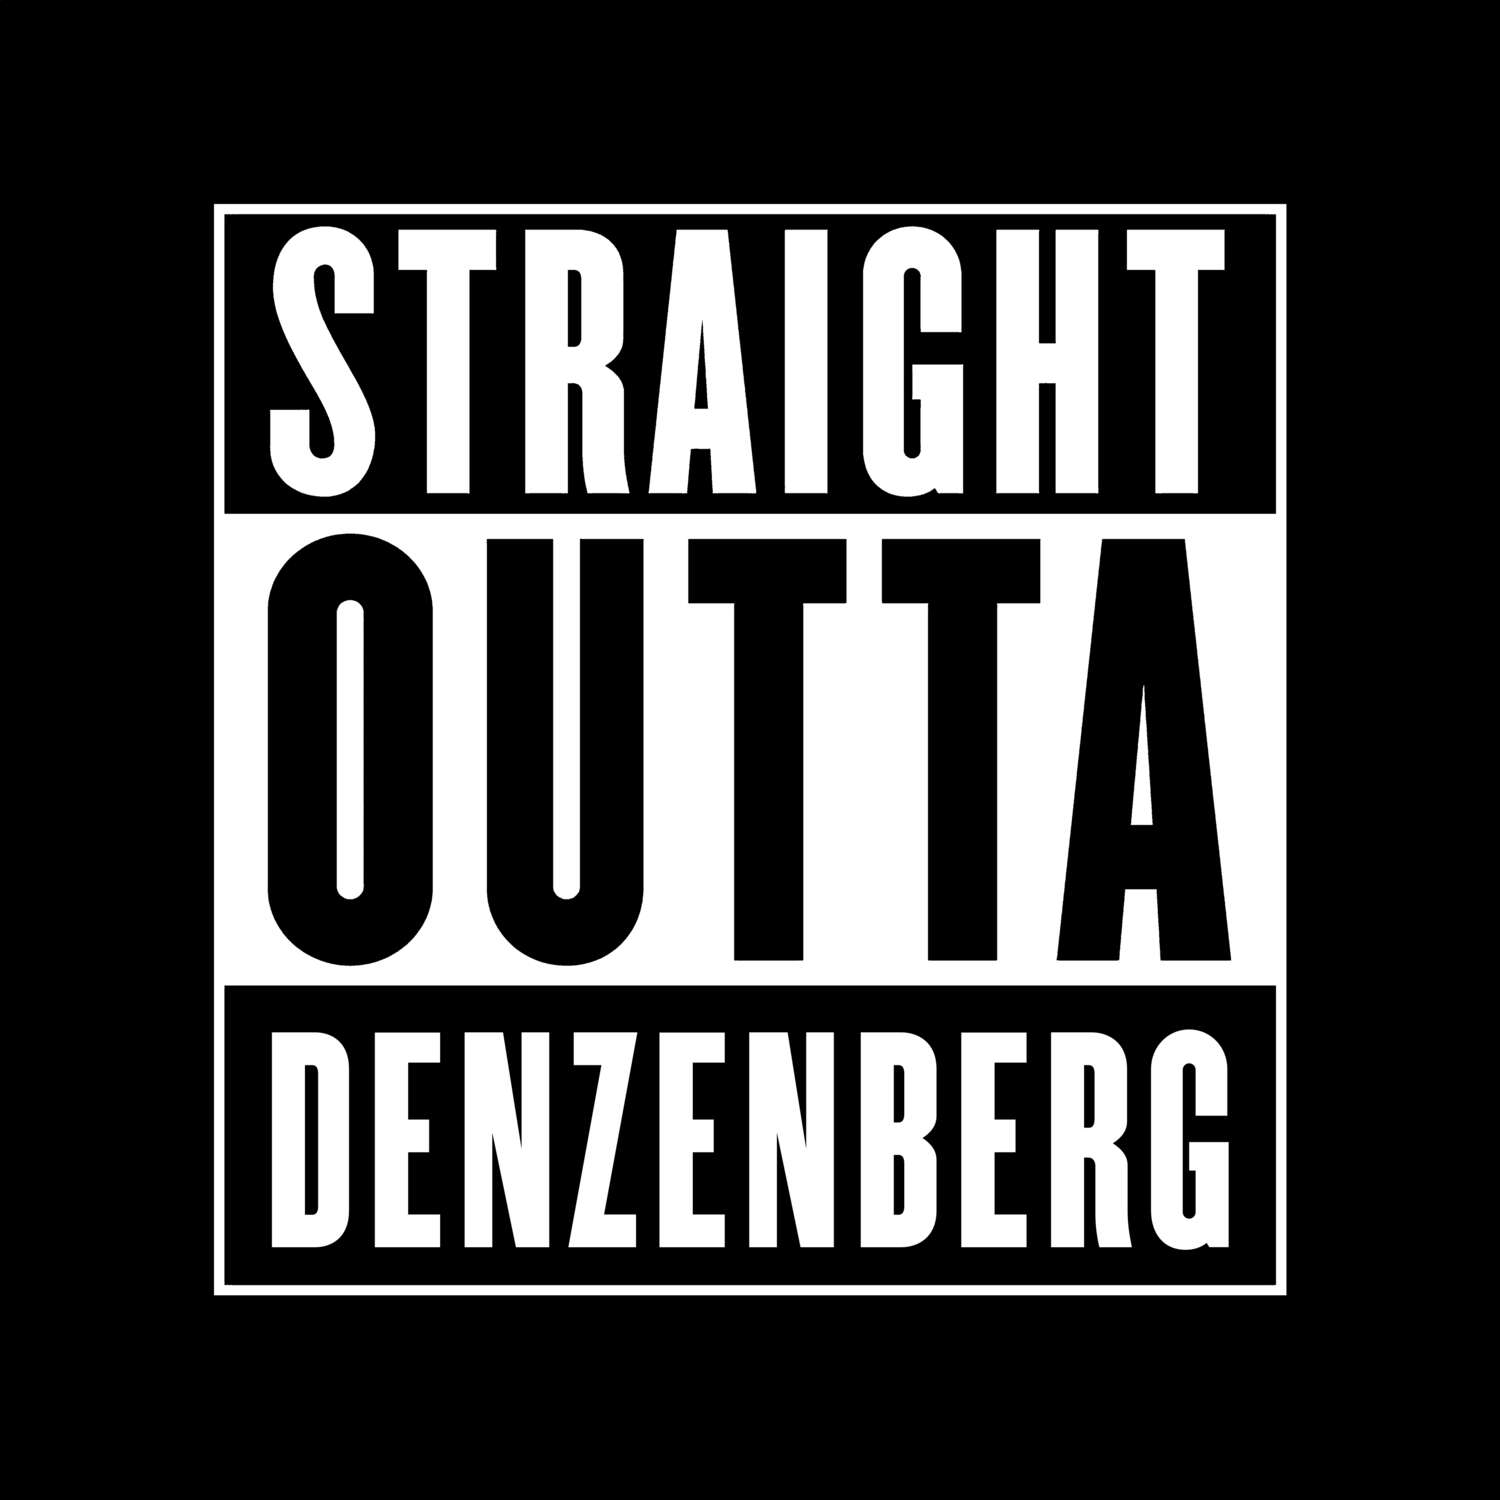 Denzenberg T-Shirt »Straight Outta«